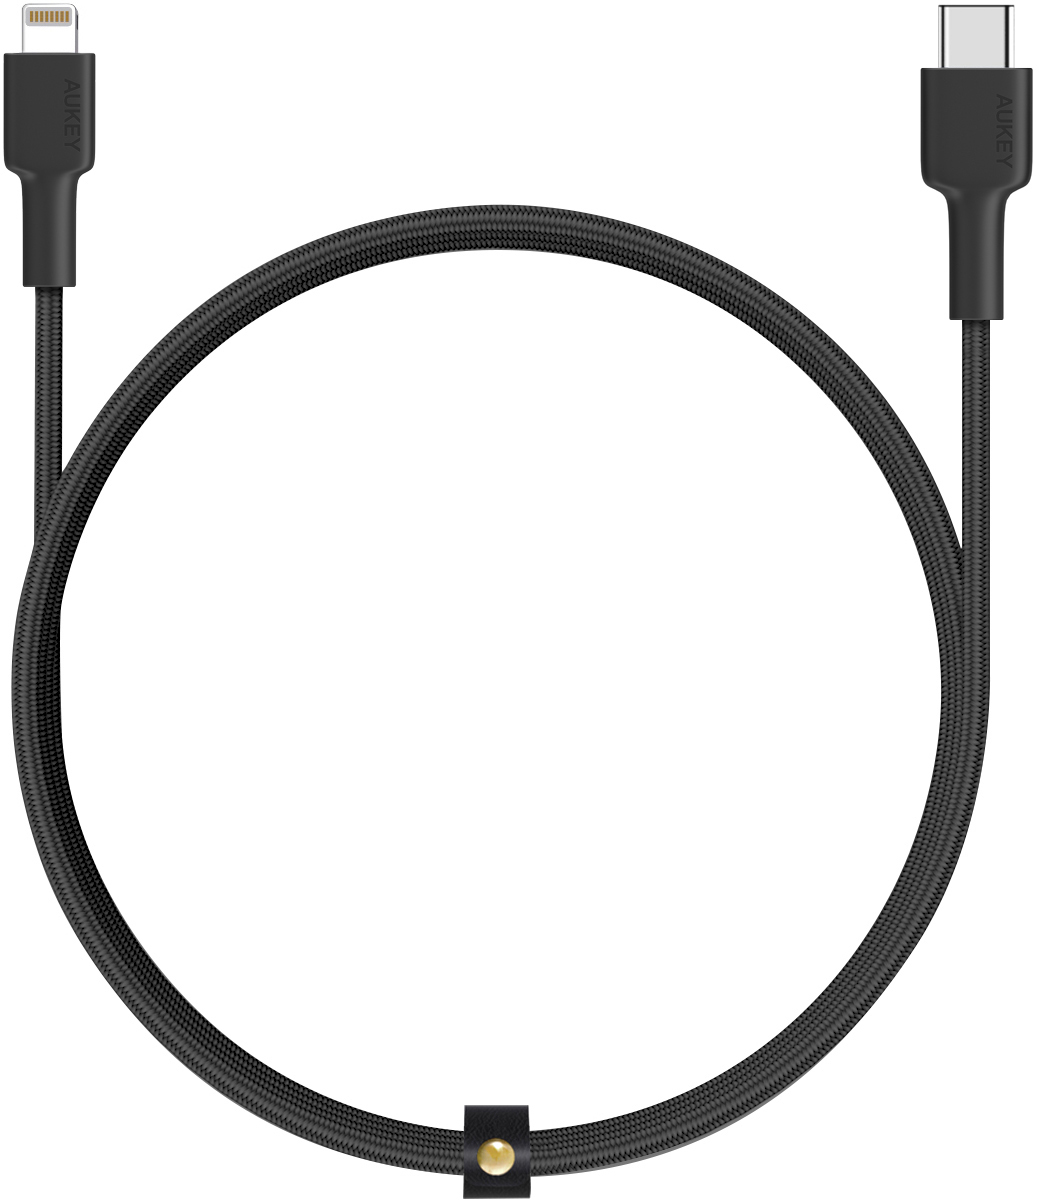 AUKEY Impulse Cable USB-C MFI bl. CB-CL1 1,2m Braided Nylon